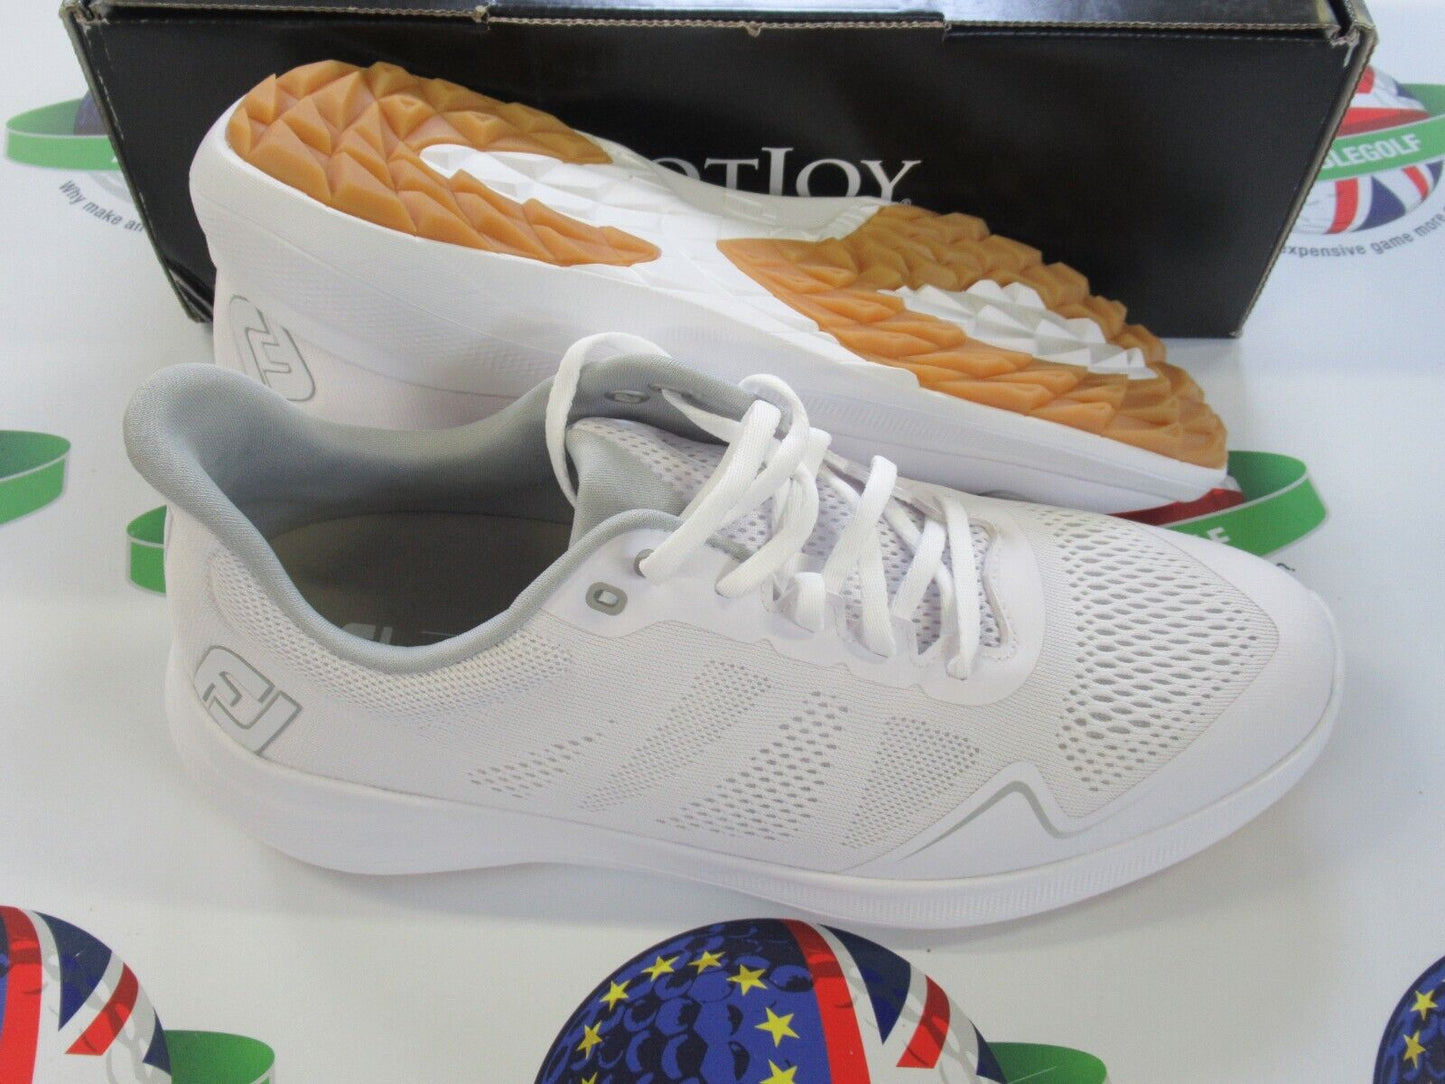 footjoy flex golf shoes 56139k white uk size 8.5 medium